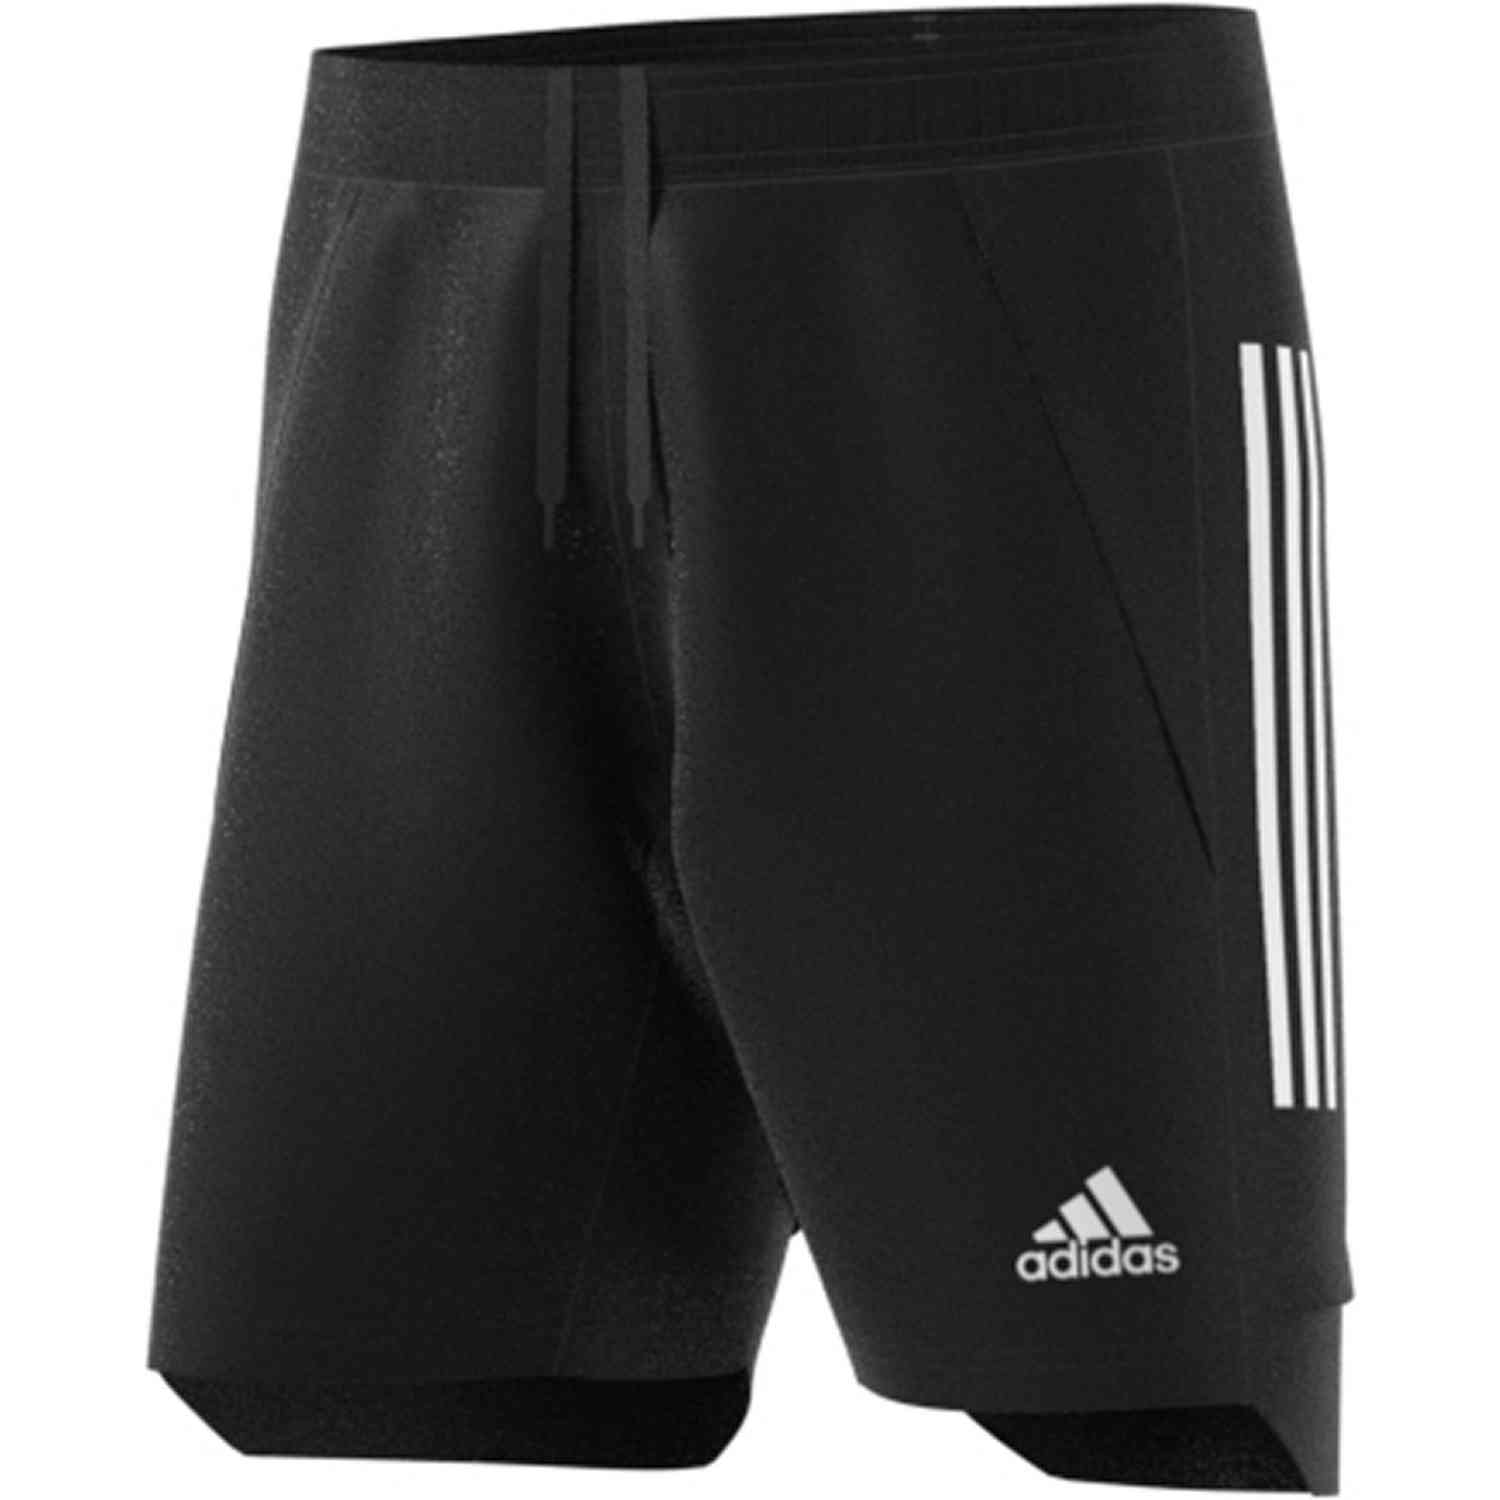 adidas Condivo 20 Training Shorts - Black/White - SoccerPro